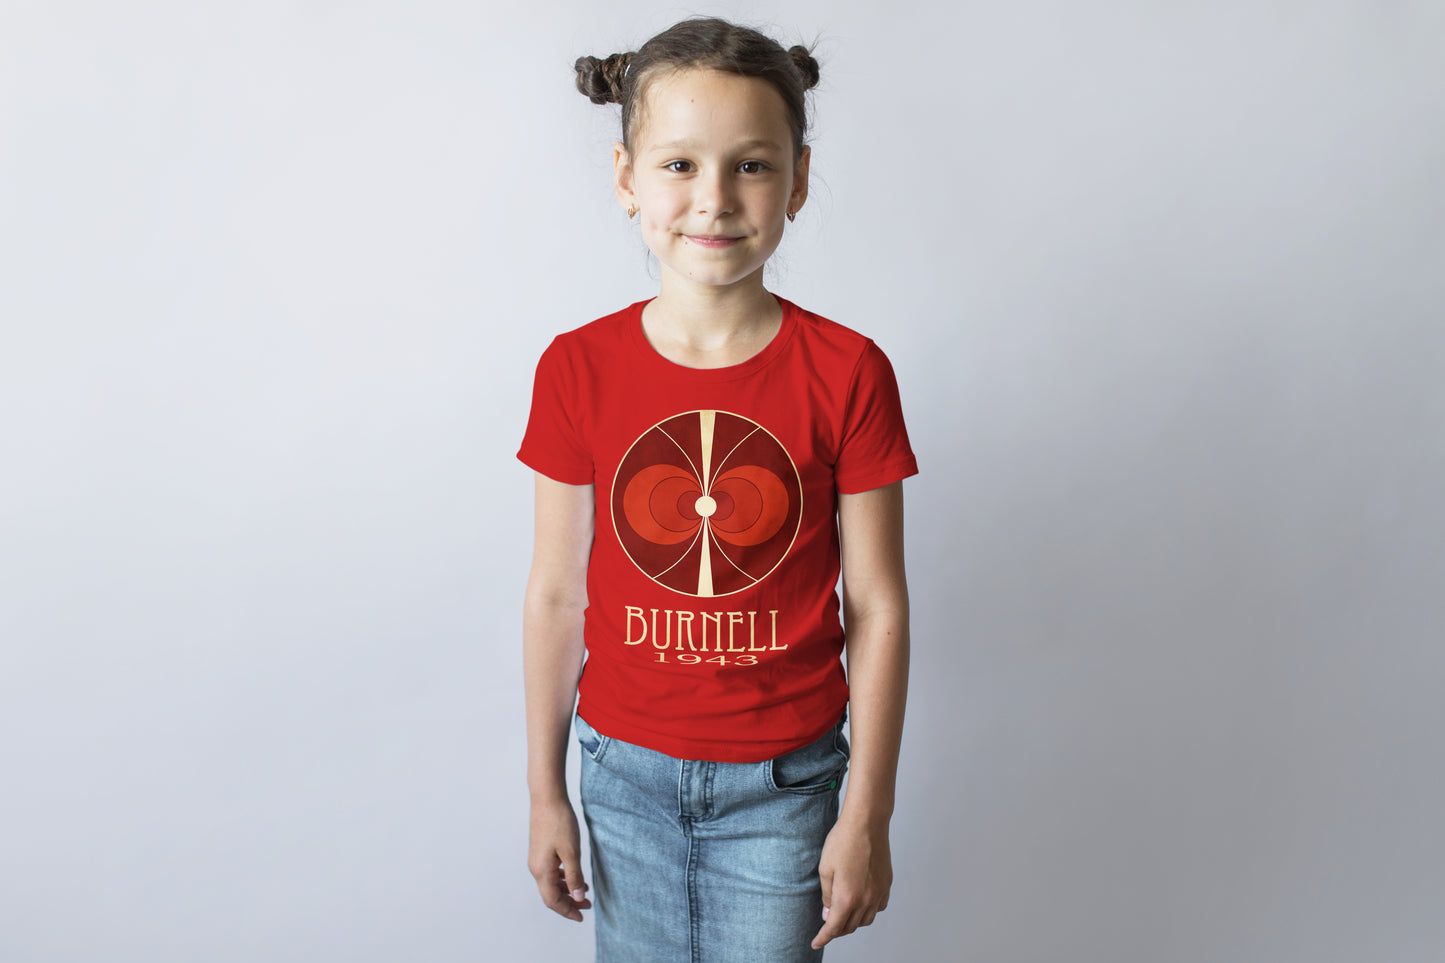 Burnell Neutron Star Astronomy T-shirt, Jocelyn Burnell Pulsar Shirt